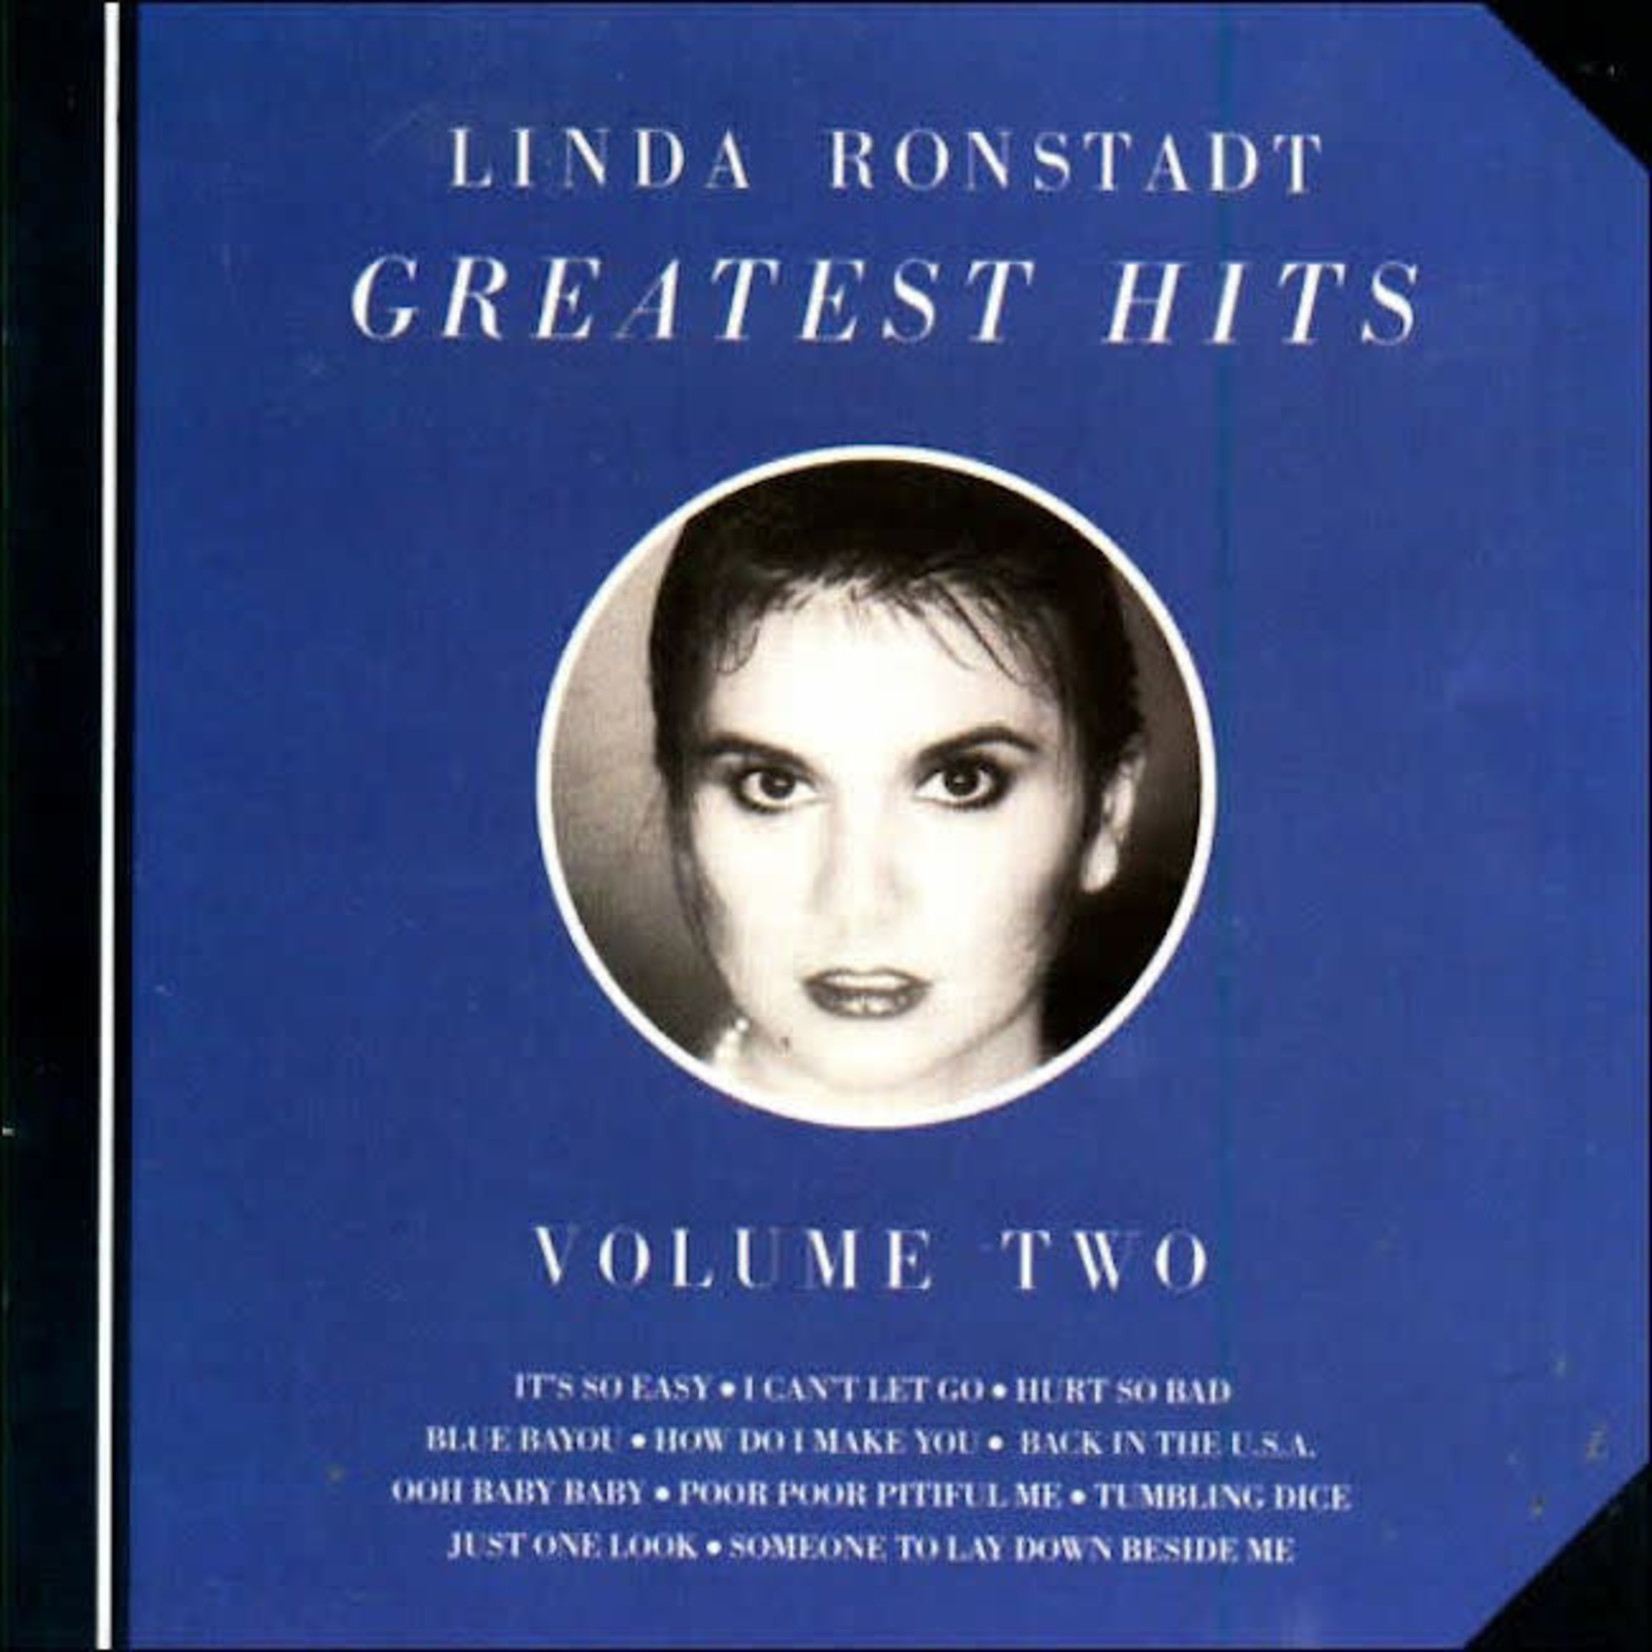 [Vintage] Linda Ronstadt - Greatest Hits Volume Two